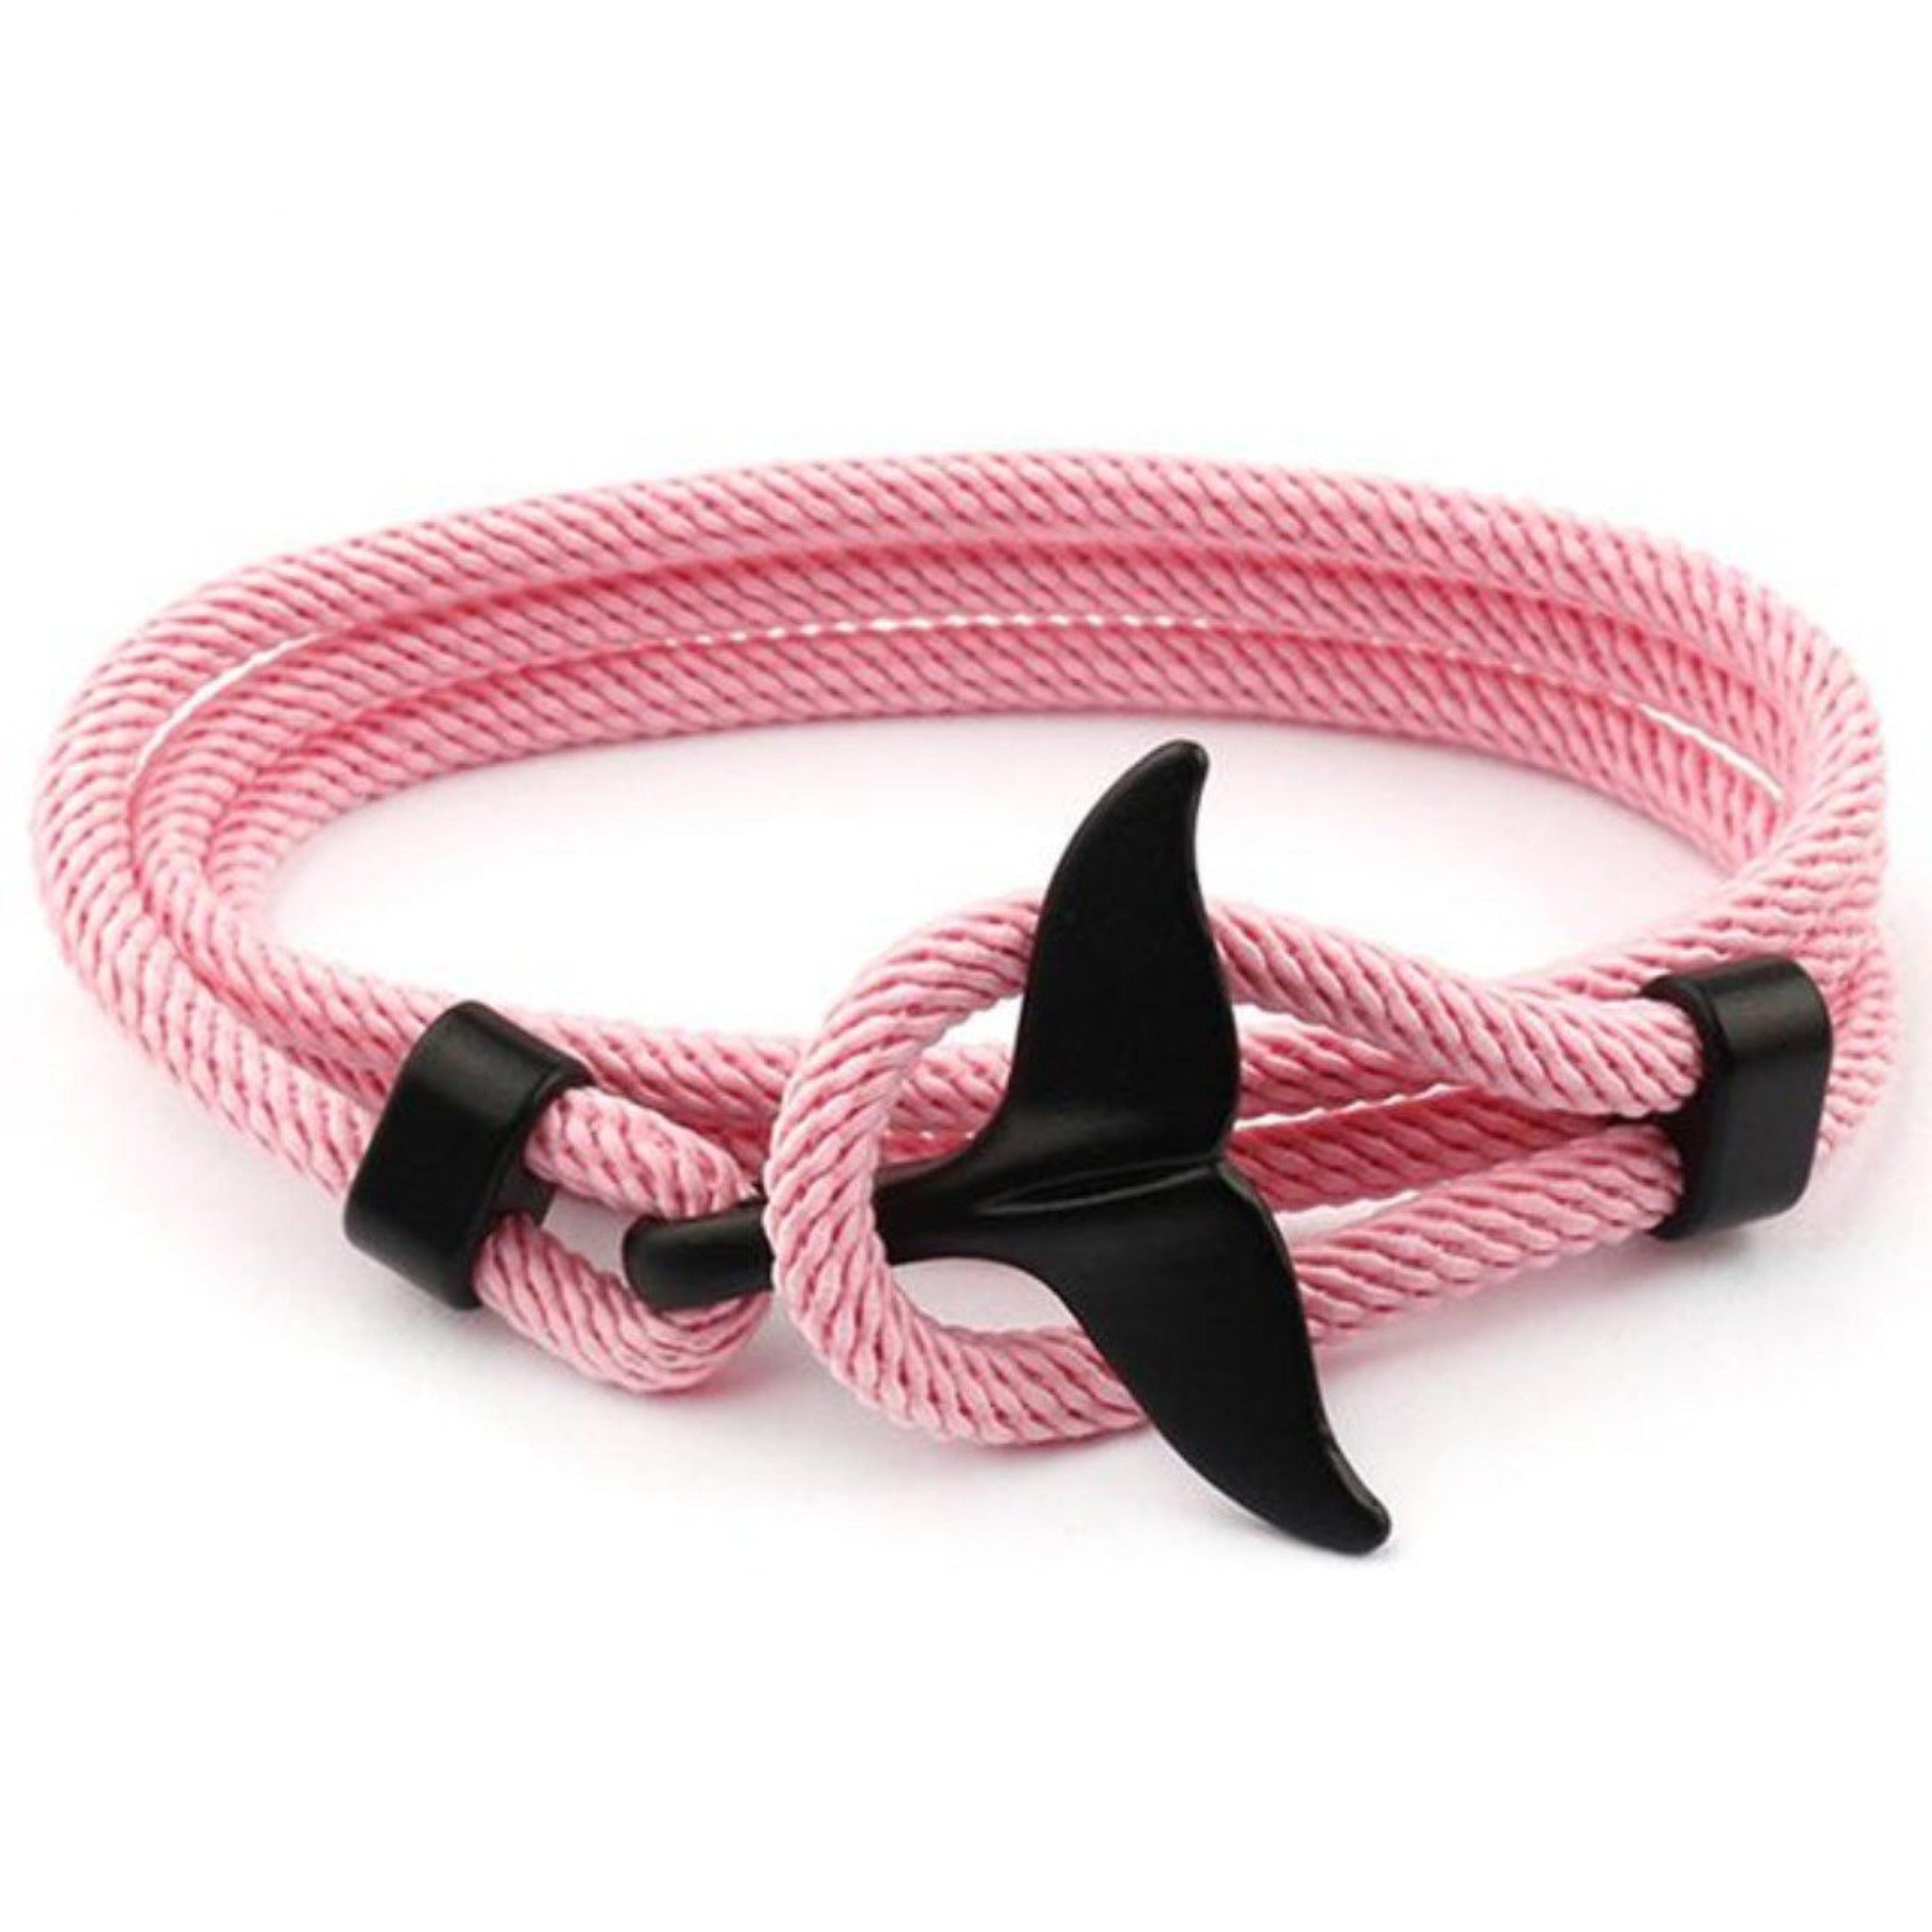 Keiko Tail Bracelet